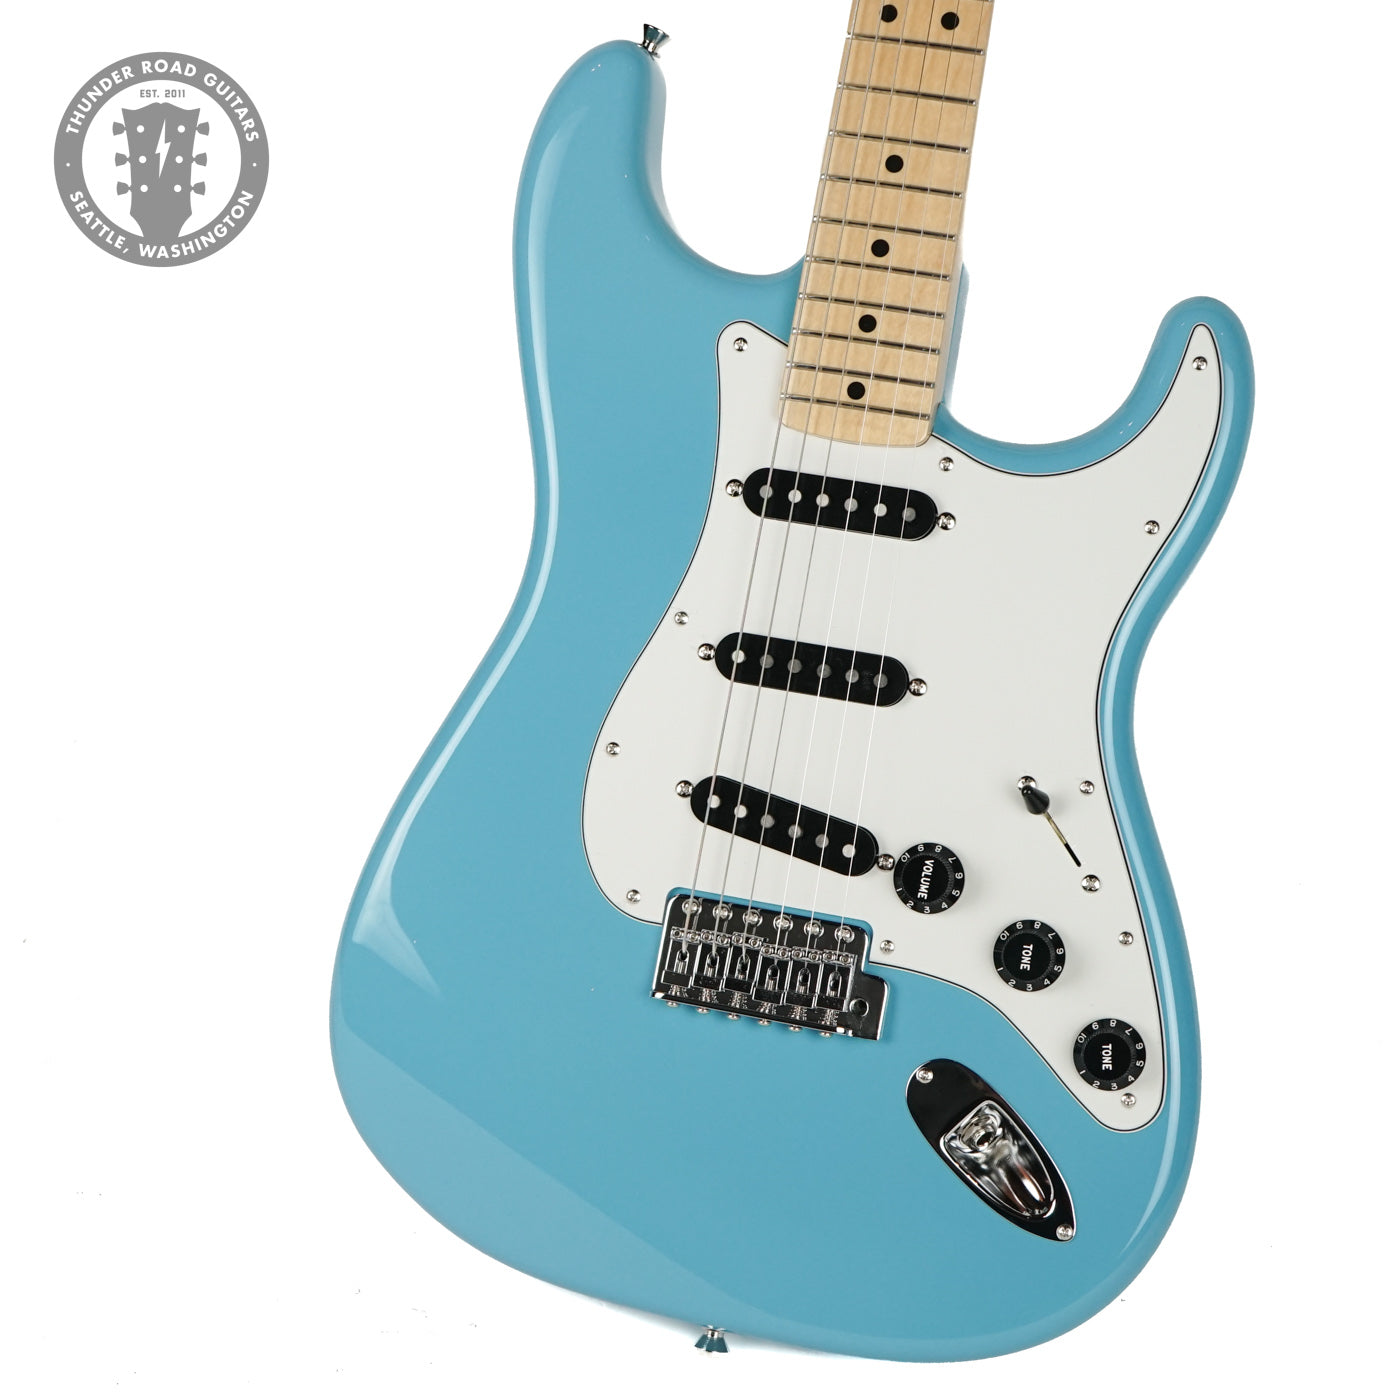 Thunder Road Guitars - New Fender Limited International Color